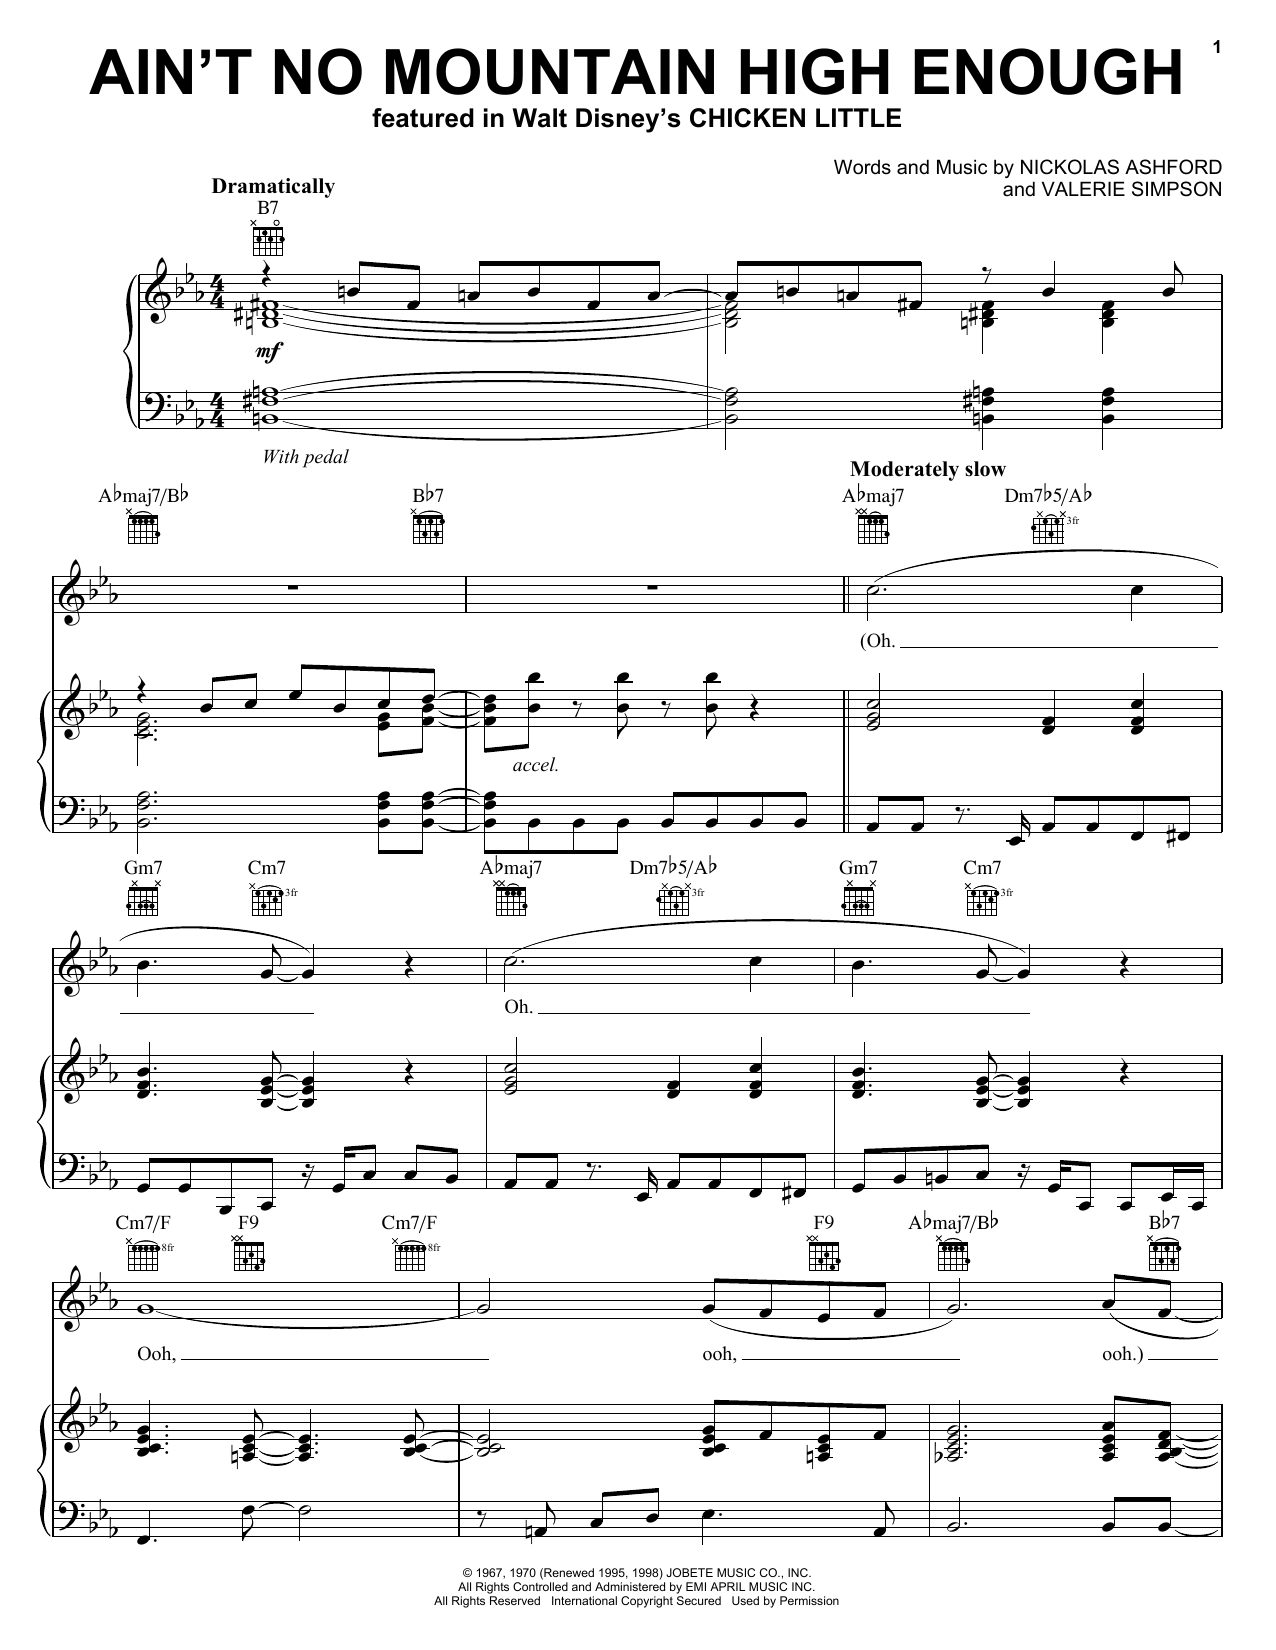 Diana Ross Ain't No Mountain High Enough sheet music notes printable PDF score